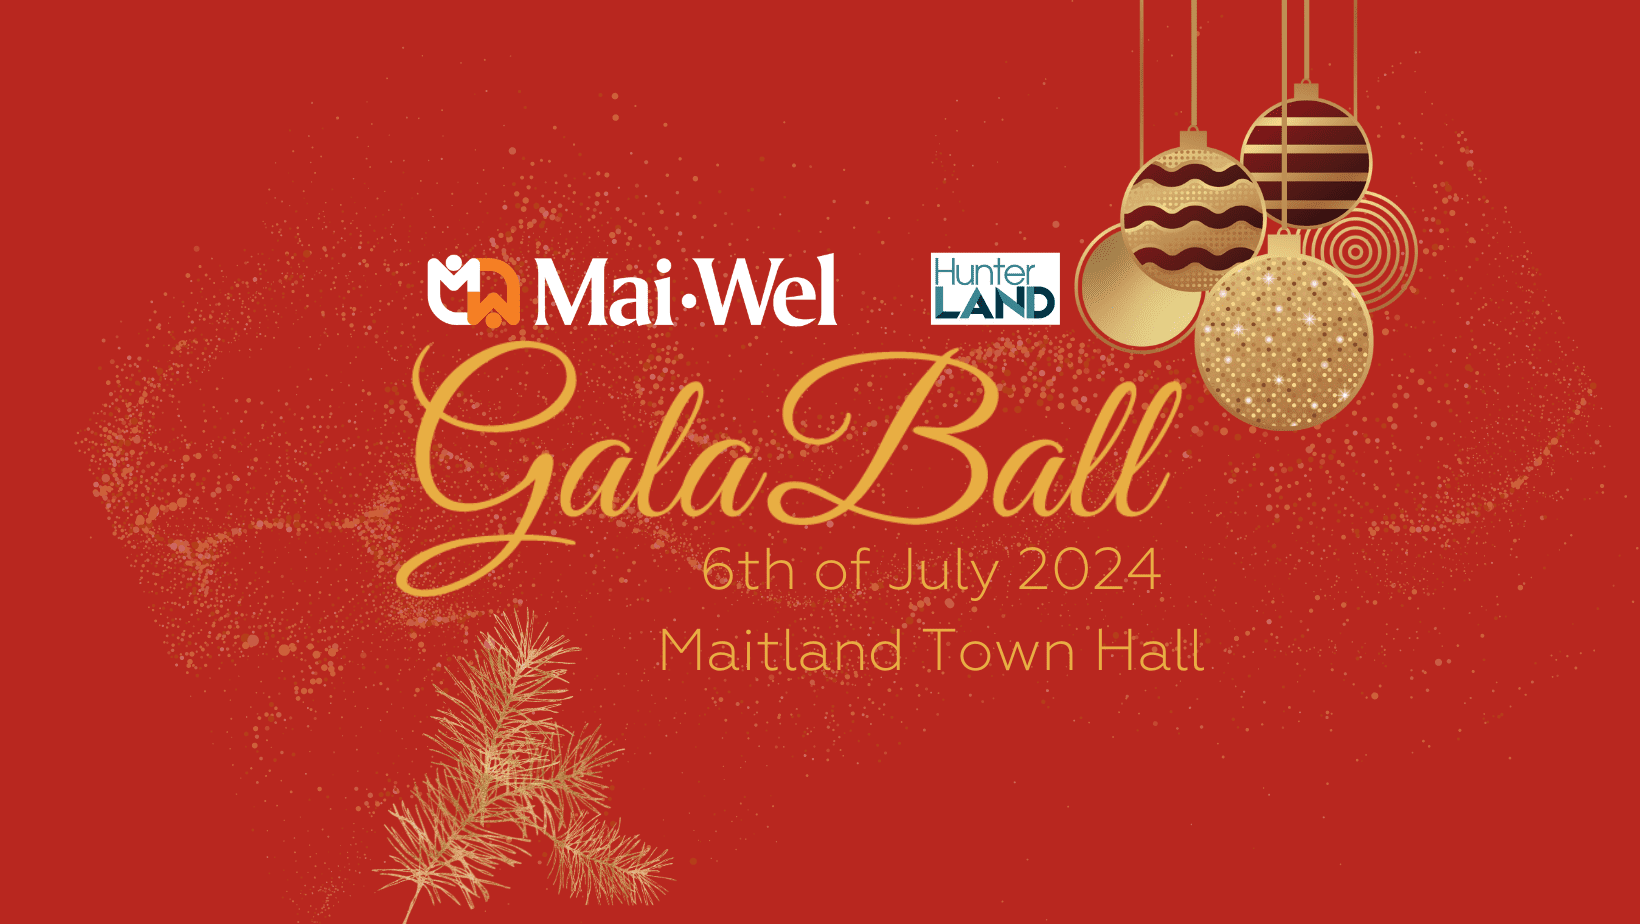 Mai-Wel Gala Ball 2024 on 6 July 2024 at Maitland Town Hall